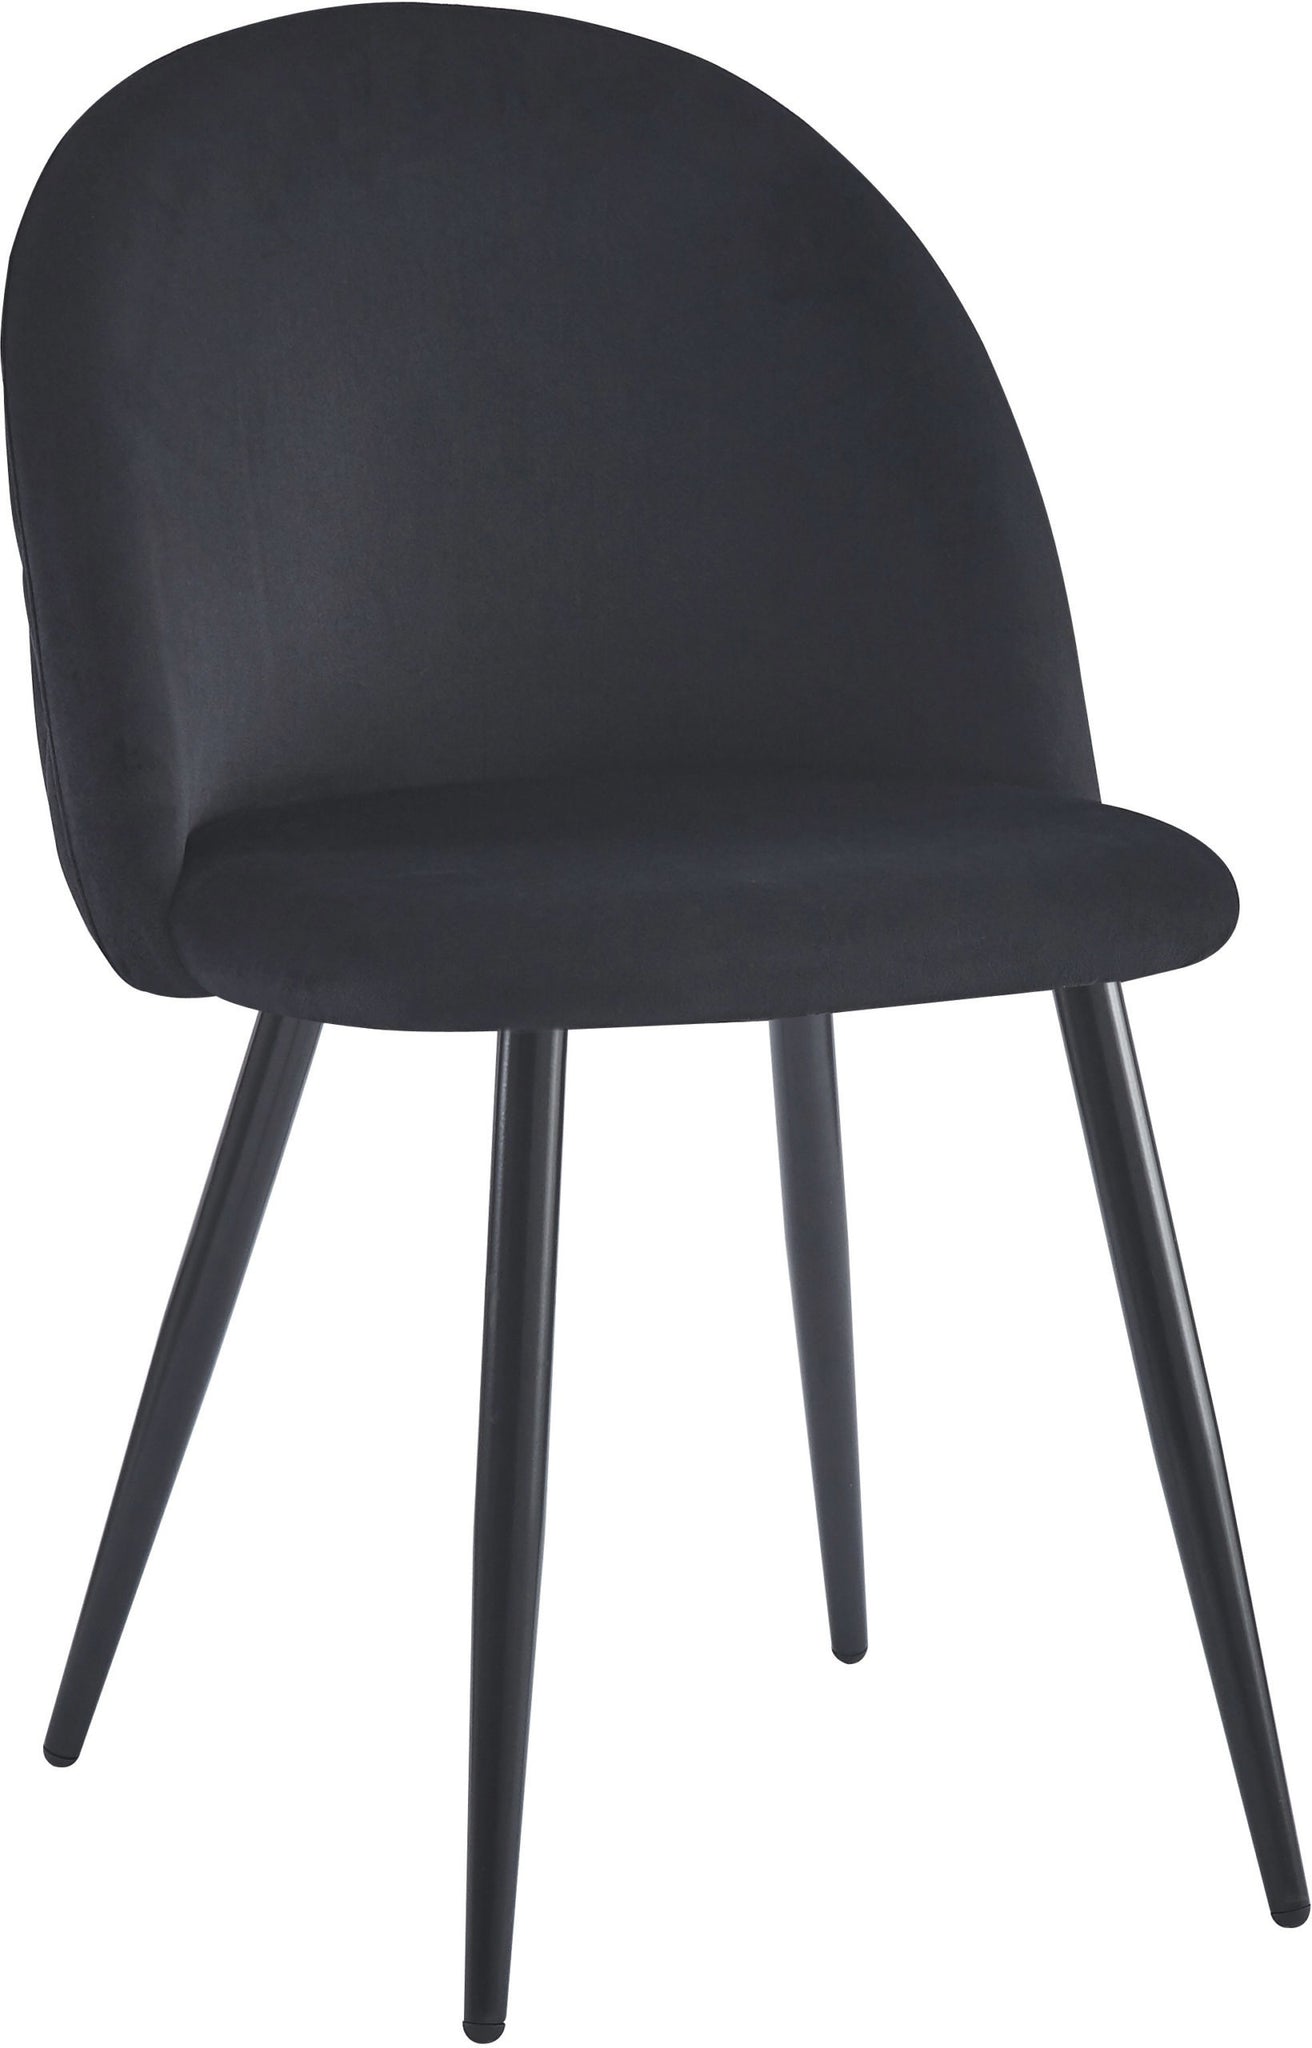 Marlow Chair - Black Velvet (4 Chairs)